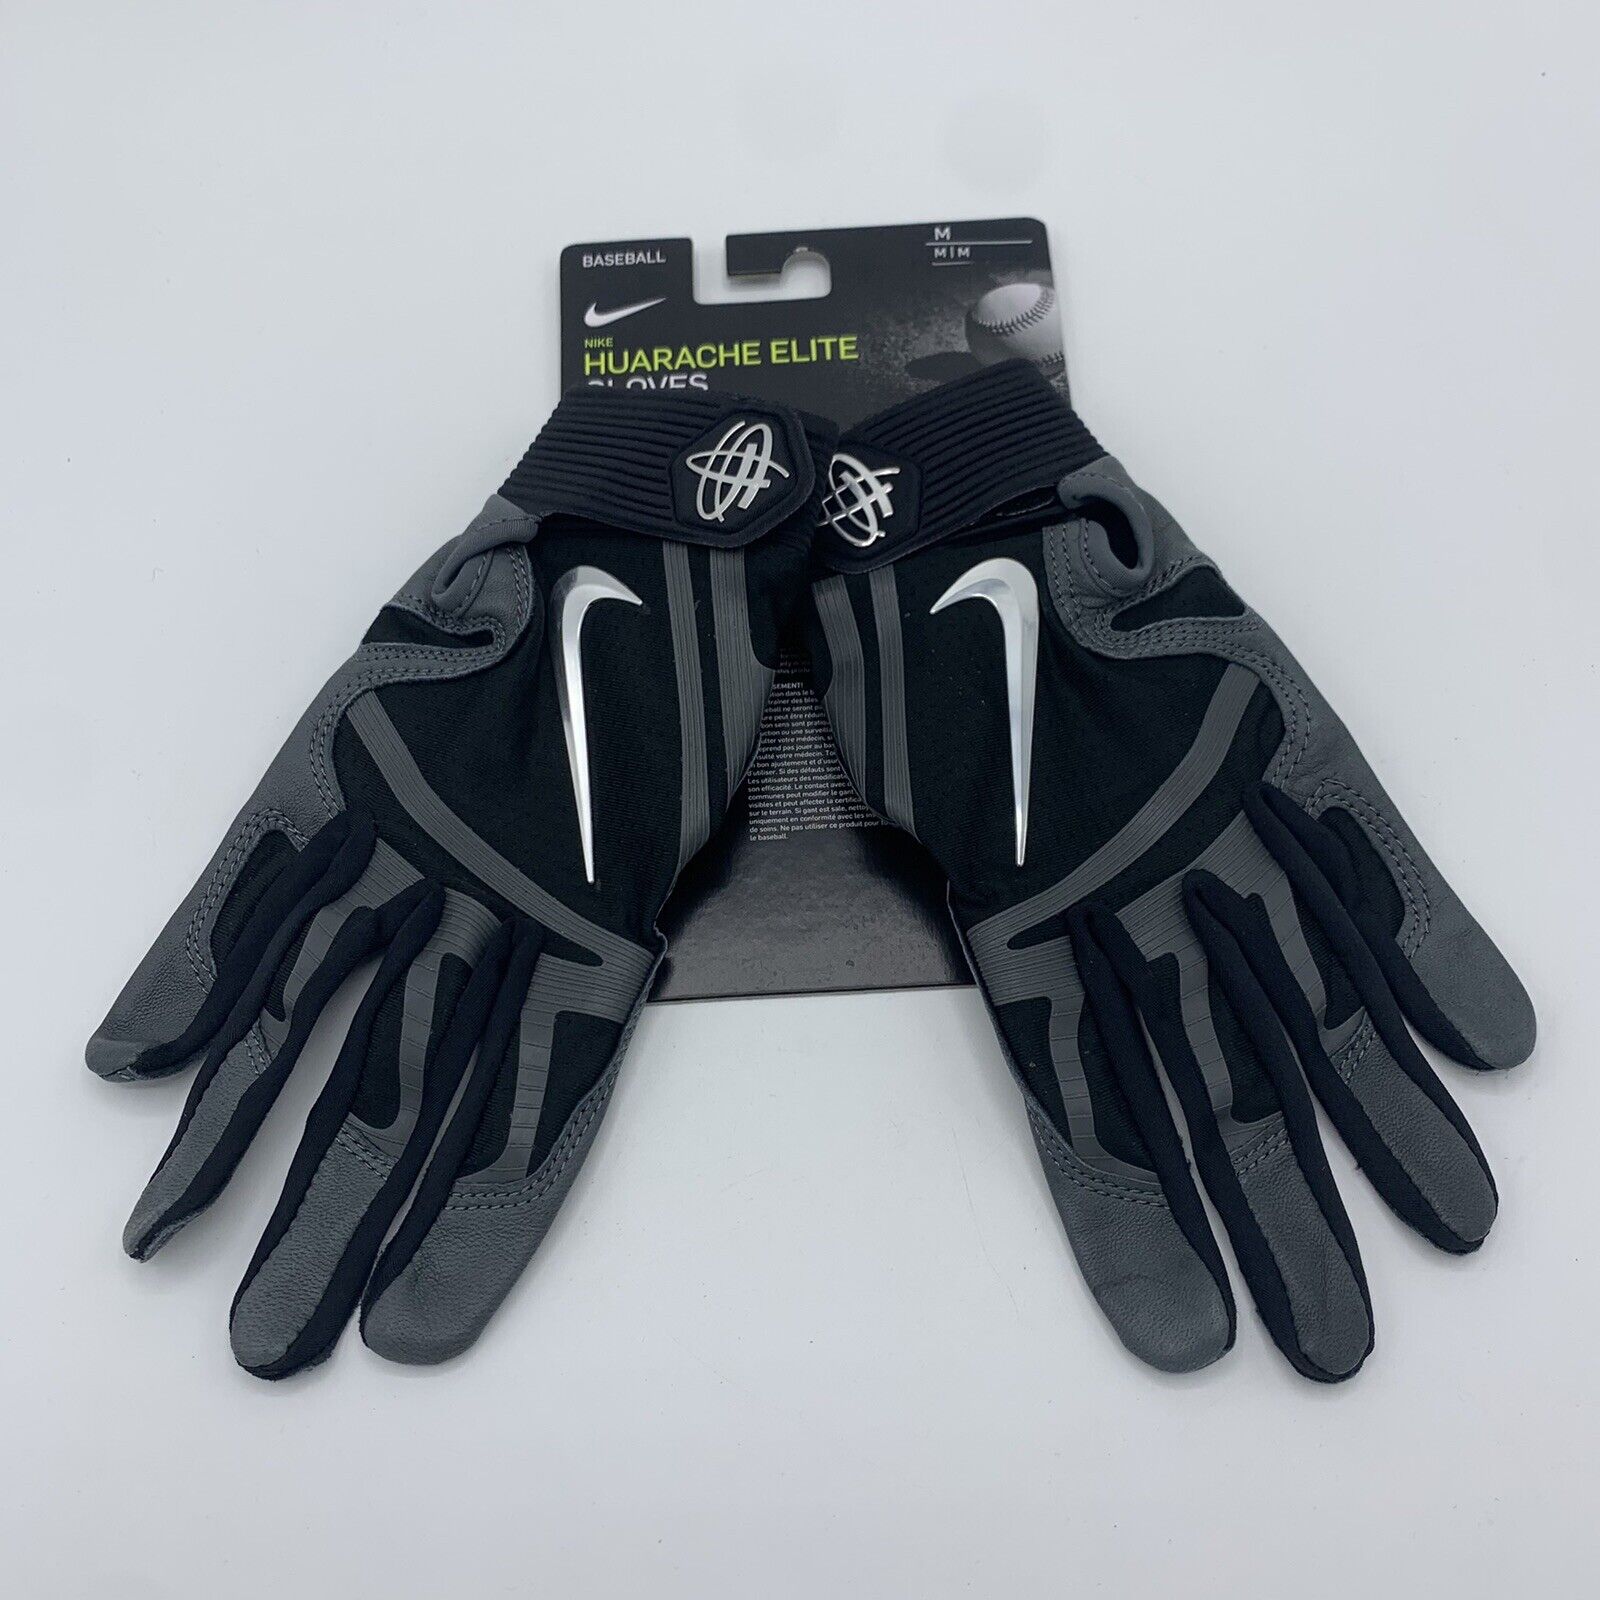 Nike Huarache Elite Baseball Batting Gloves Gray/Black Size Medi